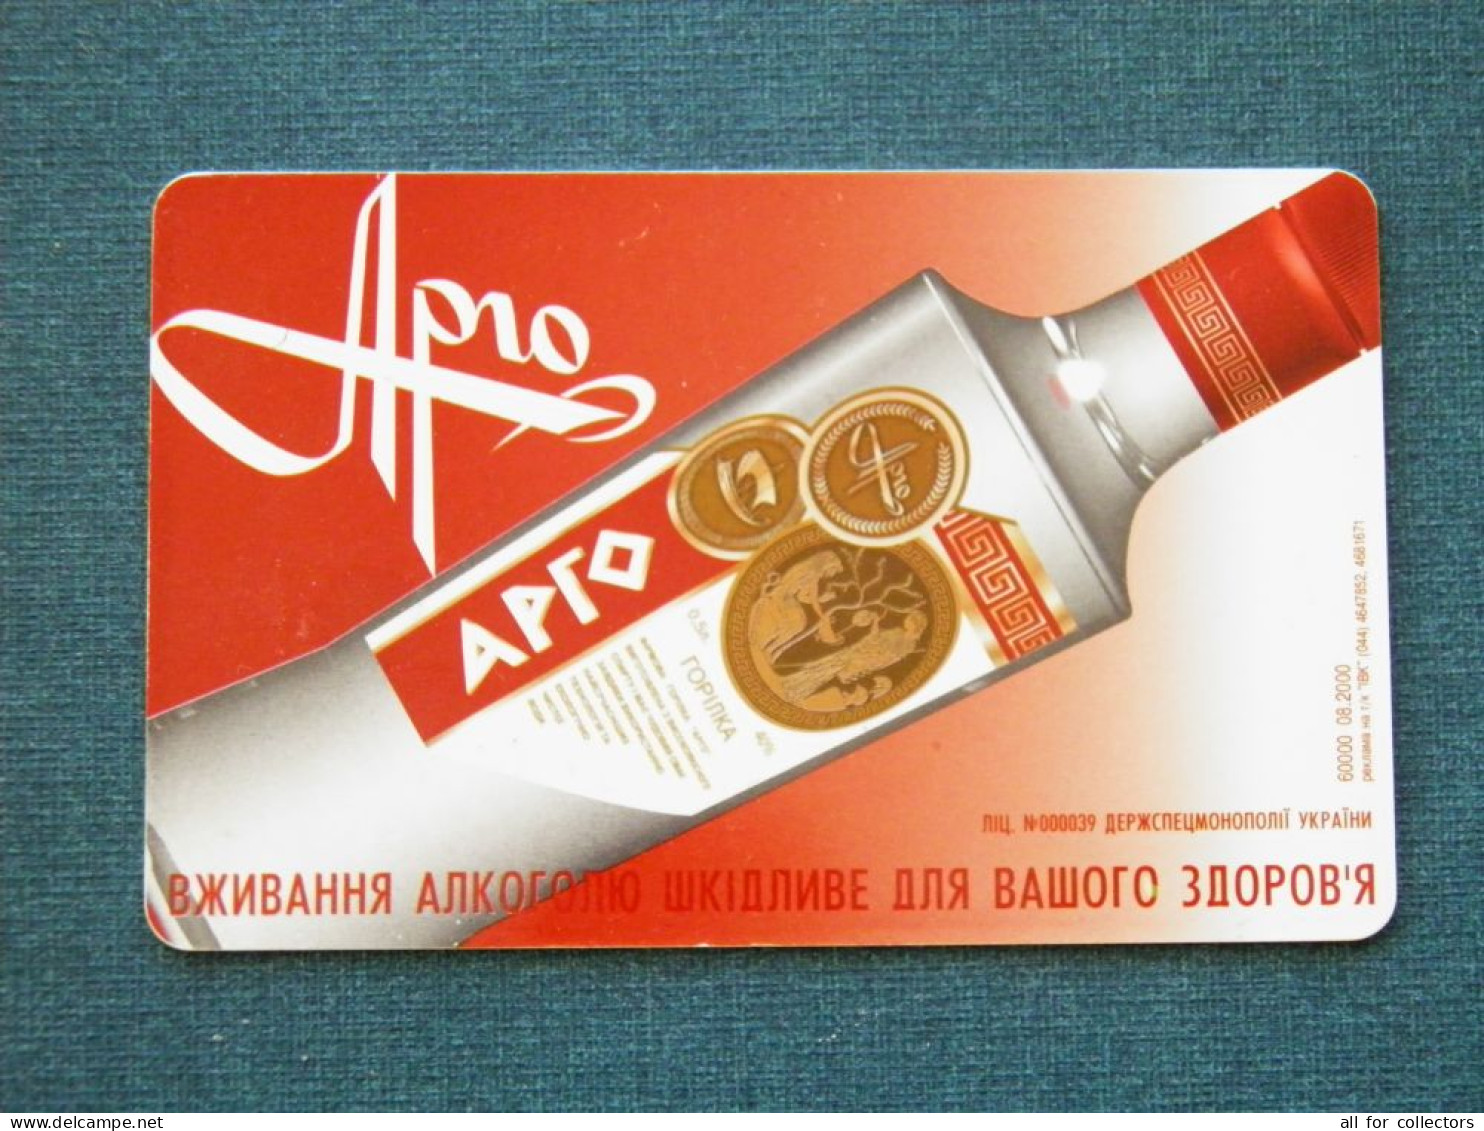 Phonecard Chip Advertising Argo Vodka Drink 3360 Units 120 Calls UKRAINE - Ucraina